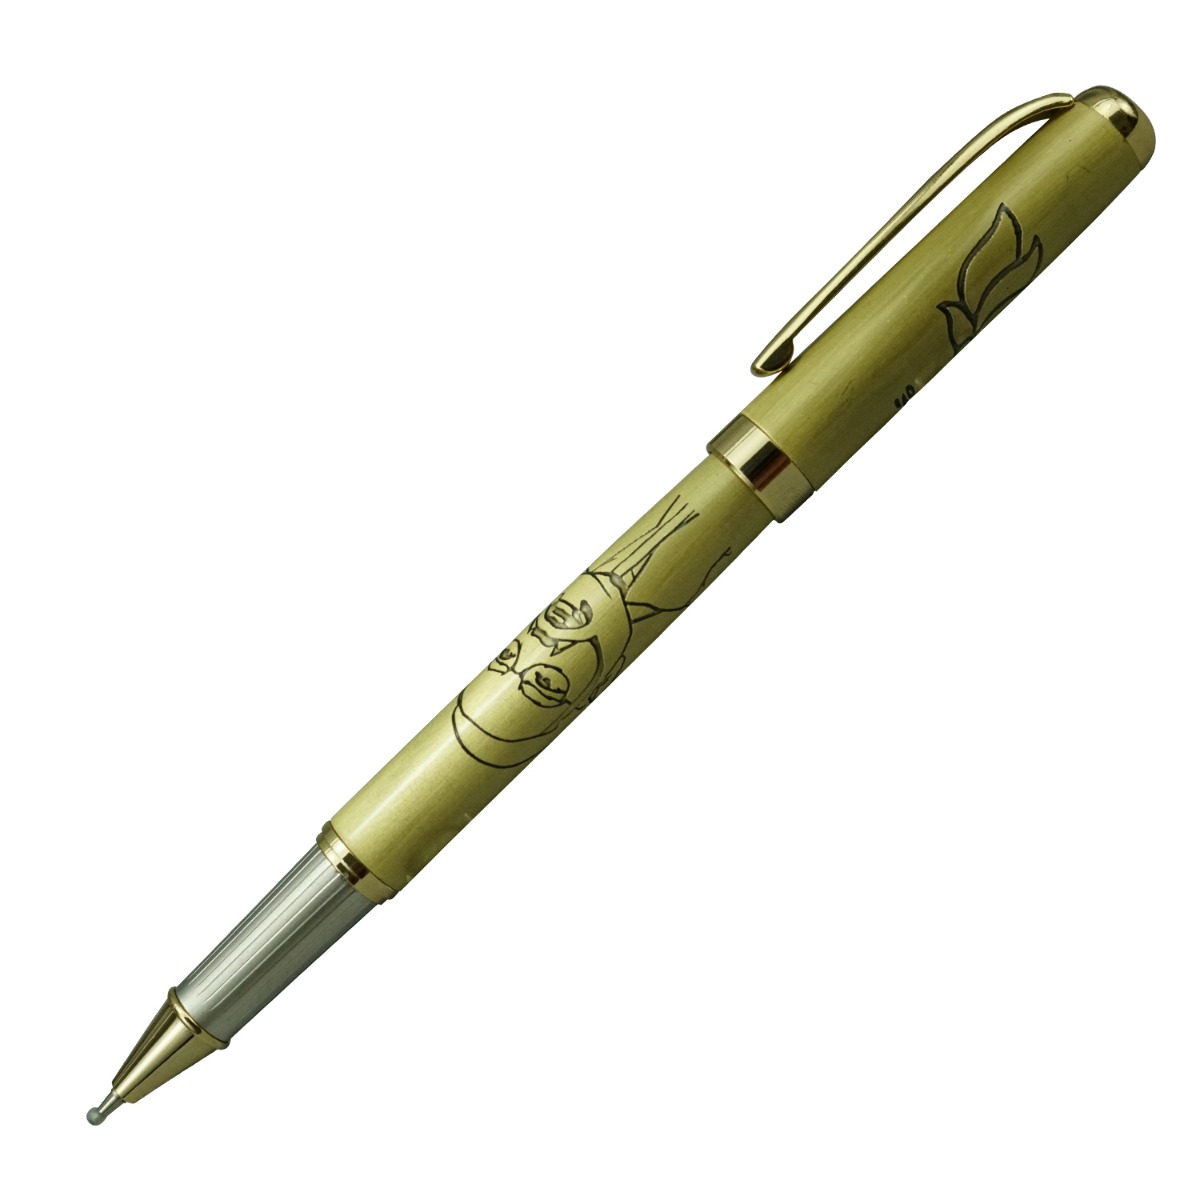 Penhouse  Model:16198   Golden Finish Modi  Image Engraved Design On Body And Lotus  On Cap   Medium Tip Gel  Pen